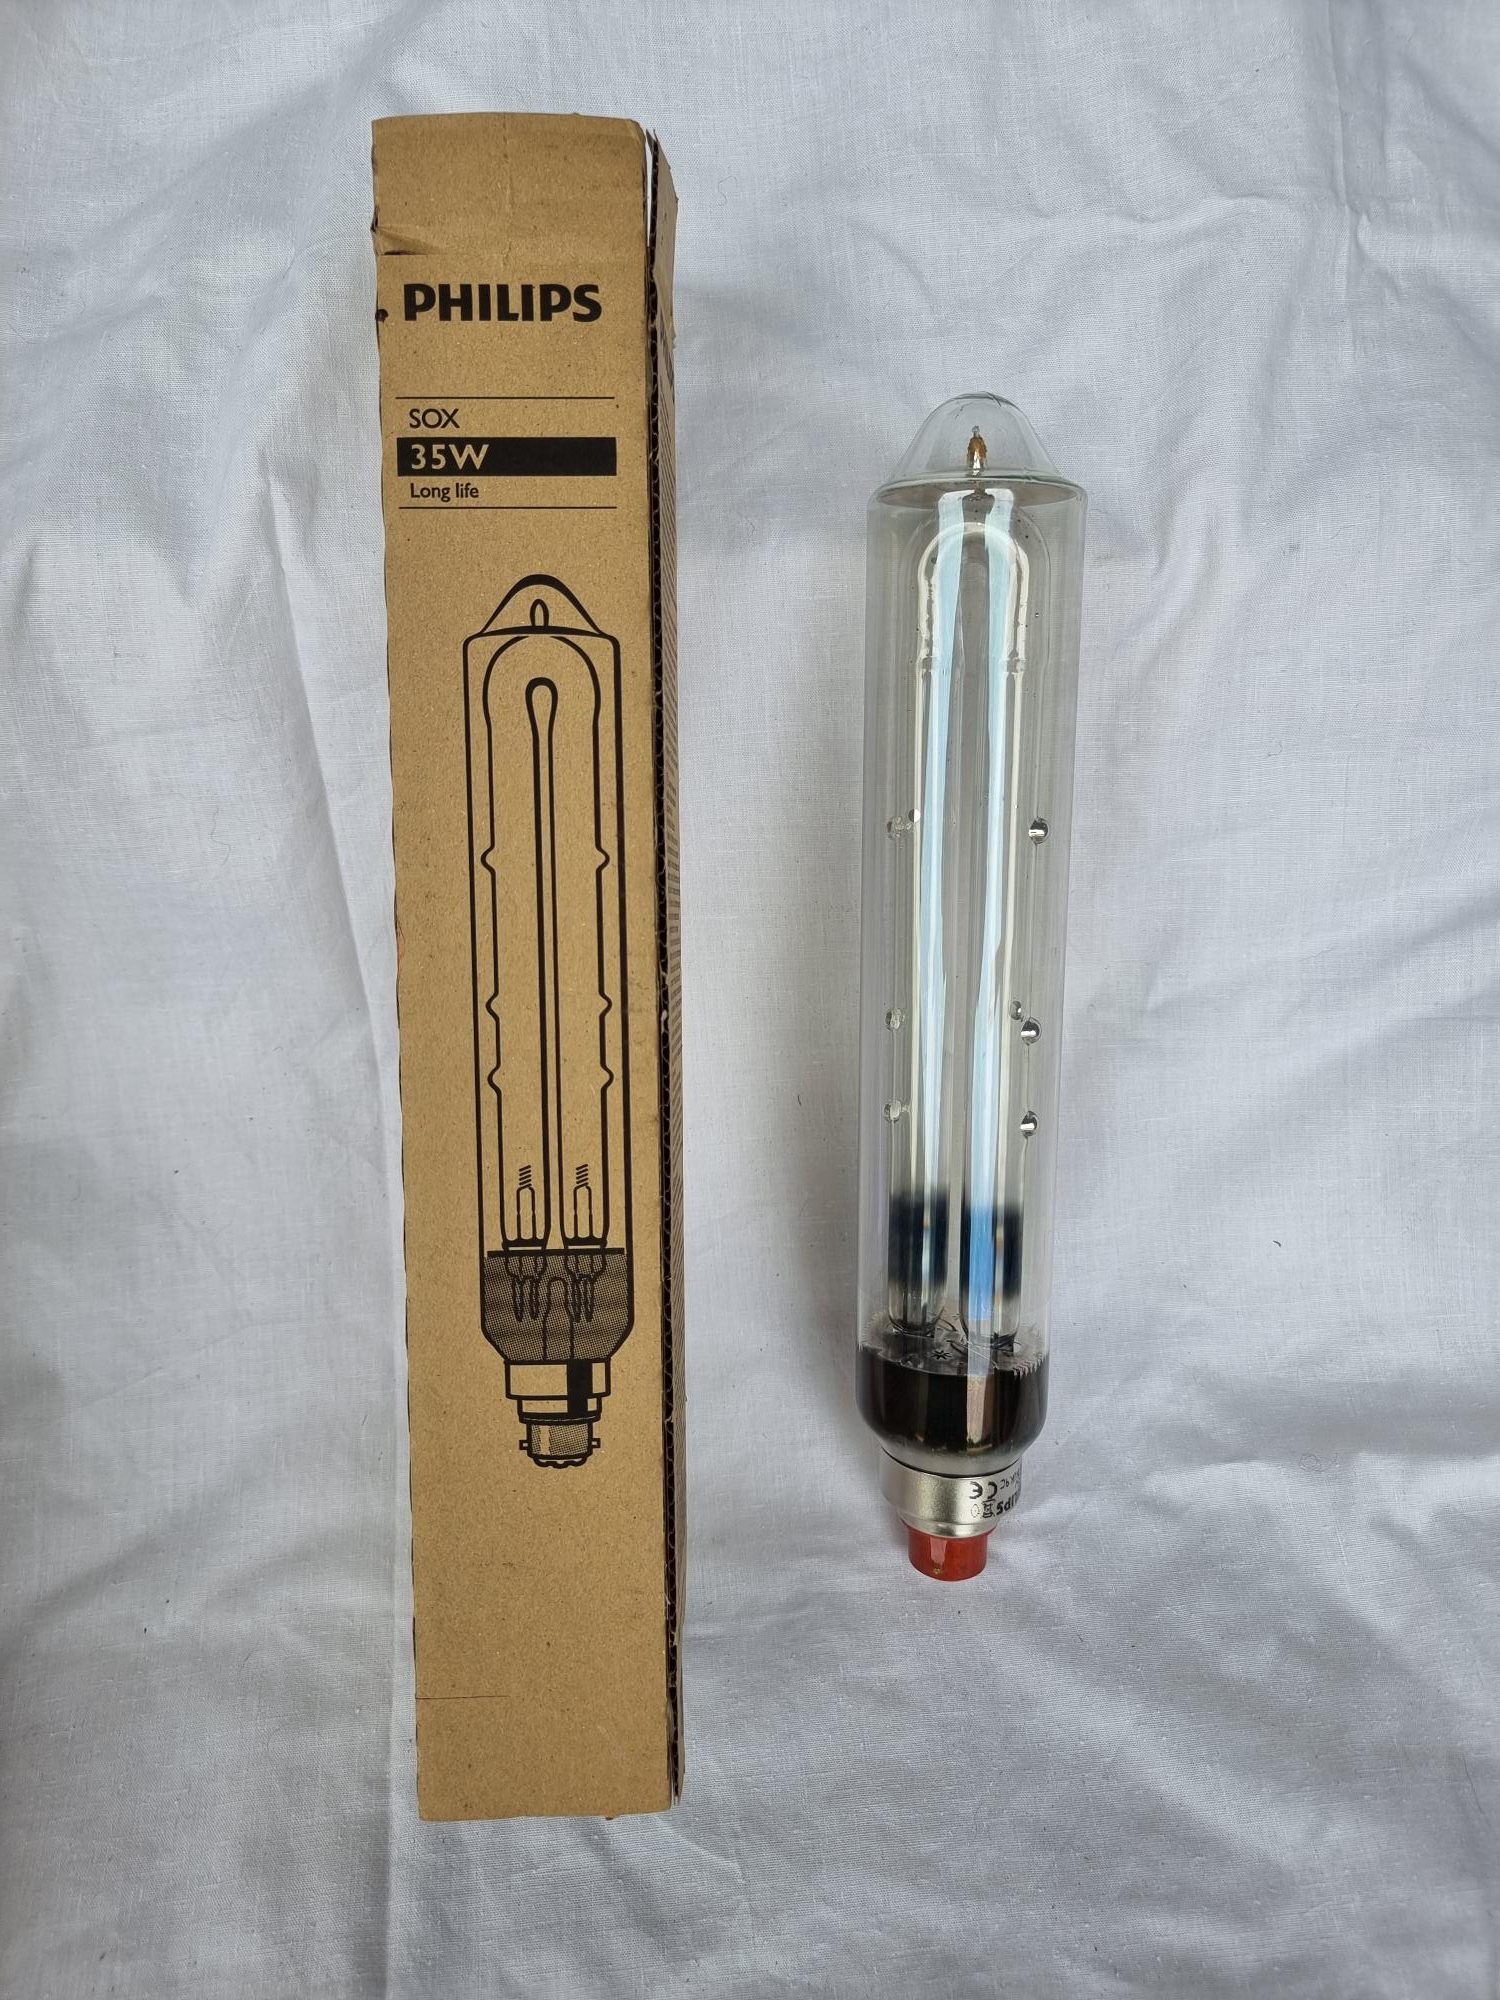 Lamps – Philips 35 Watt Sox Plus Lamps